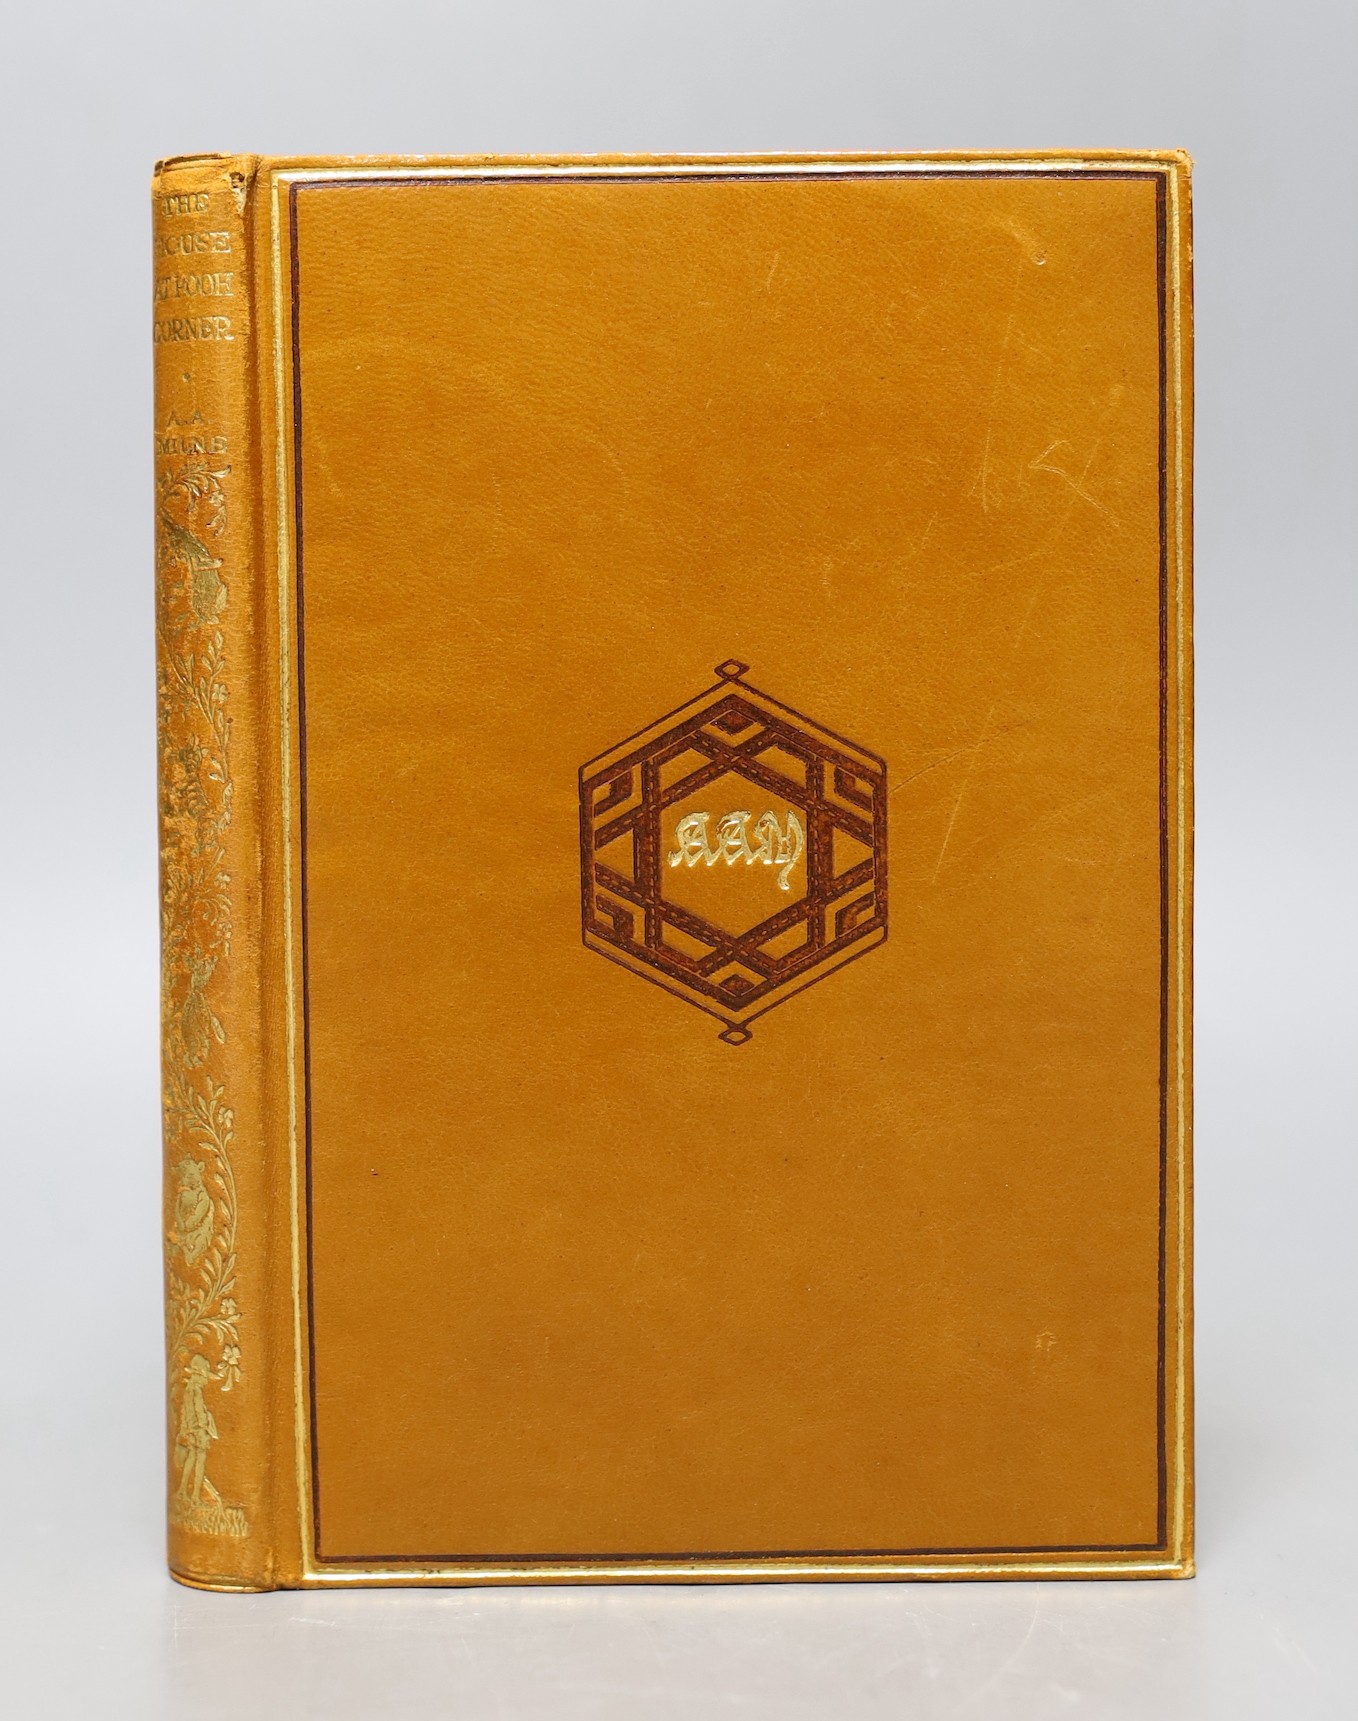 Milne, Alan Alexander - The House at Pooh Corner, 1st edition, illustrated by Ernest H. Shepard, 8vo, rebound calf gilt, Methuen & Co., London, 1928                                                                        